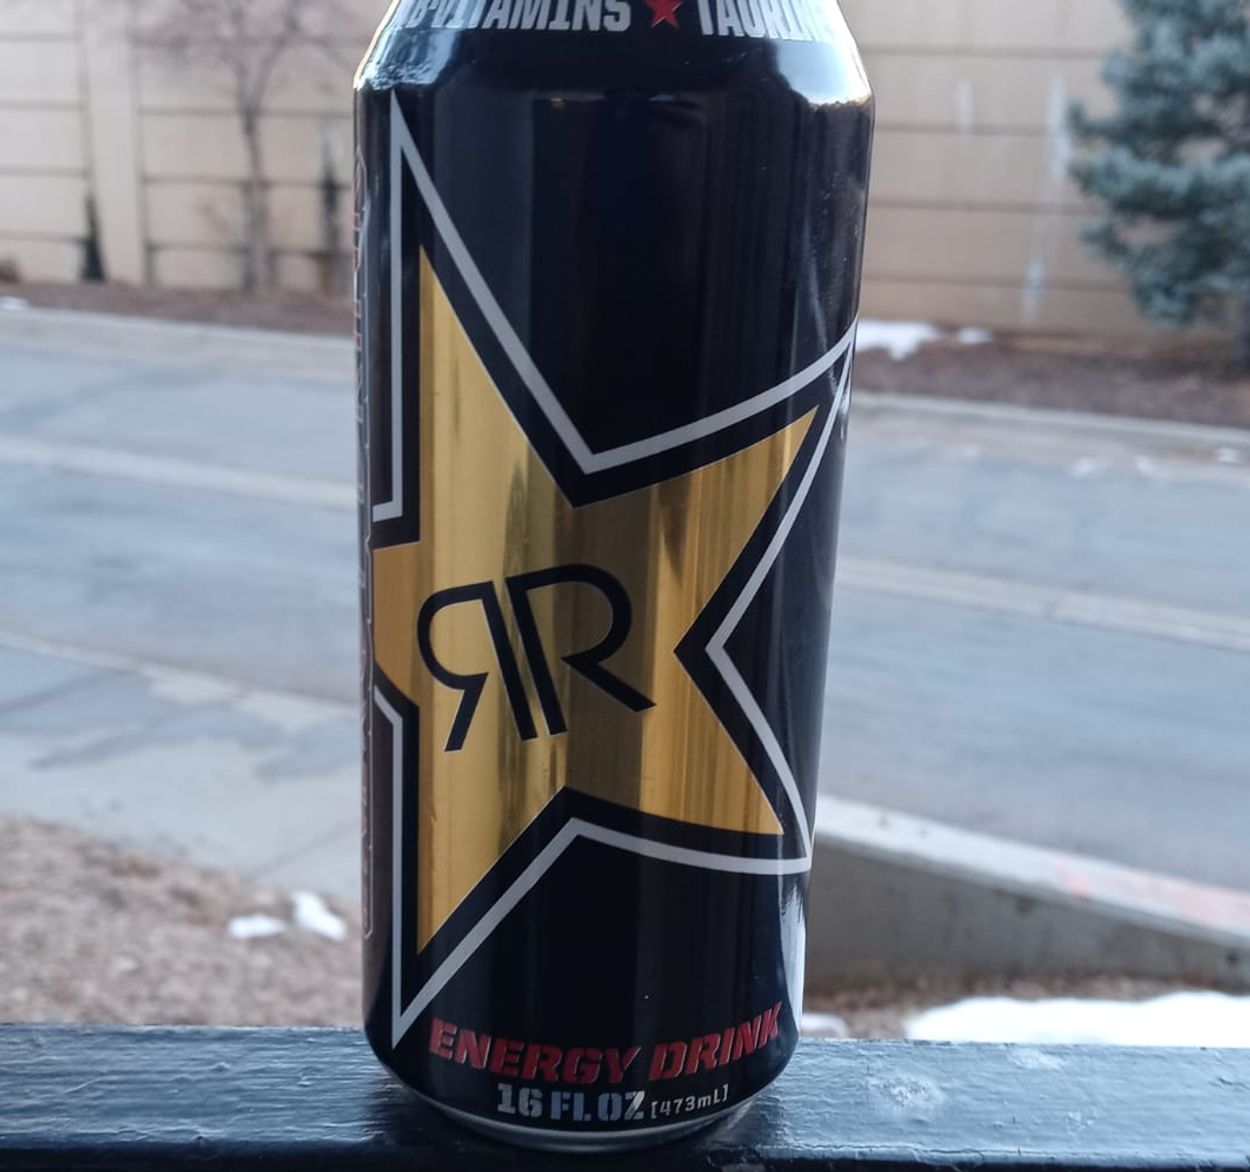 Rockstar Energy Drink.